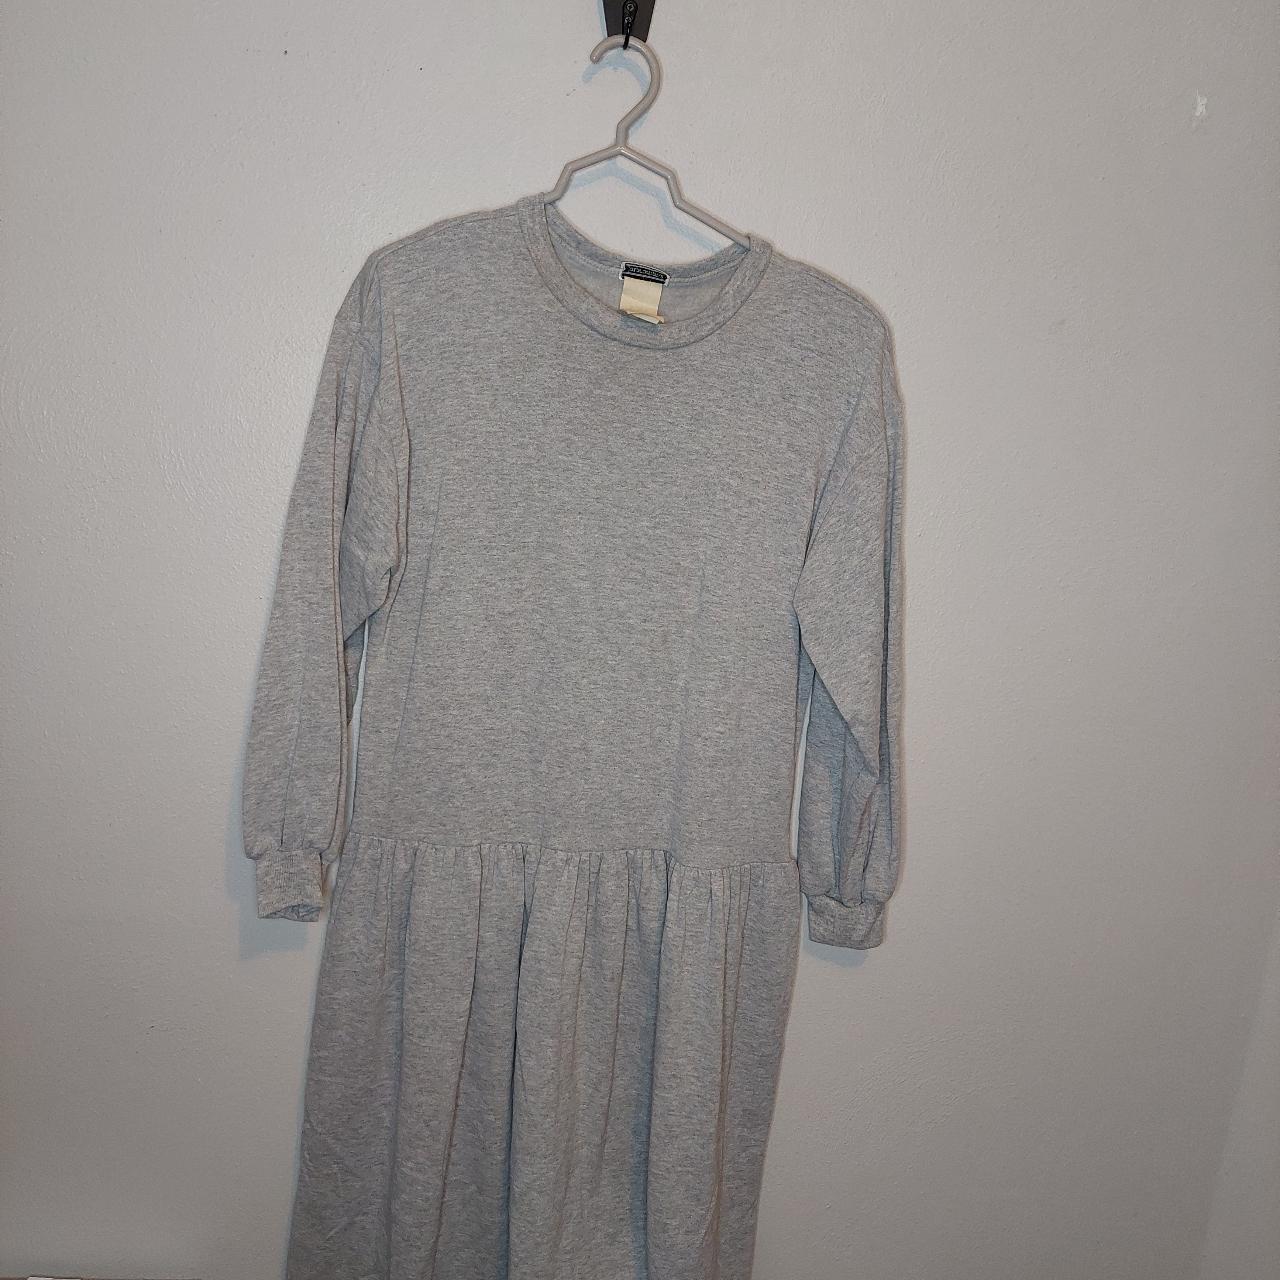 Product Image 4 - Impromptu dress, size large, gray,